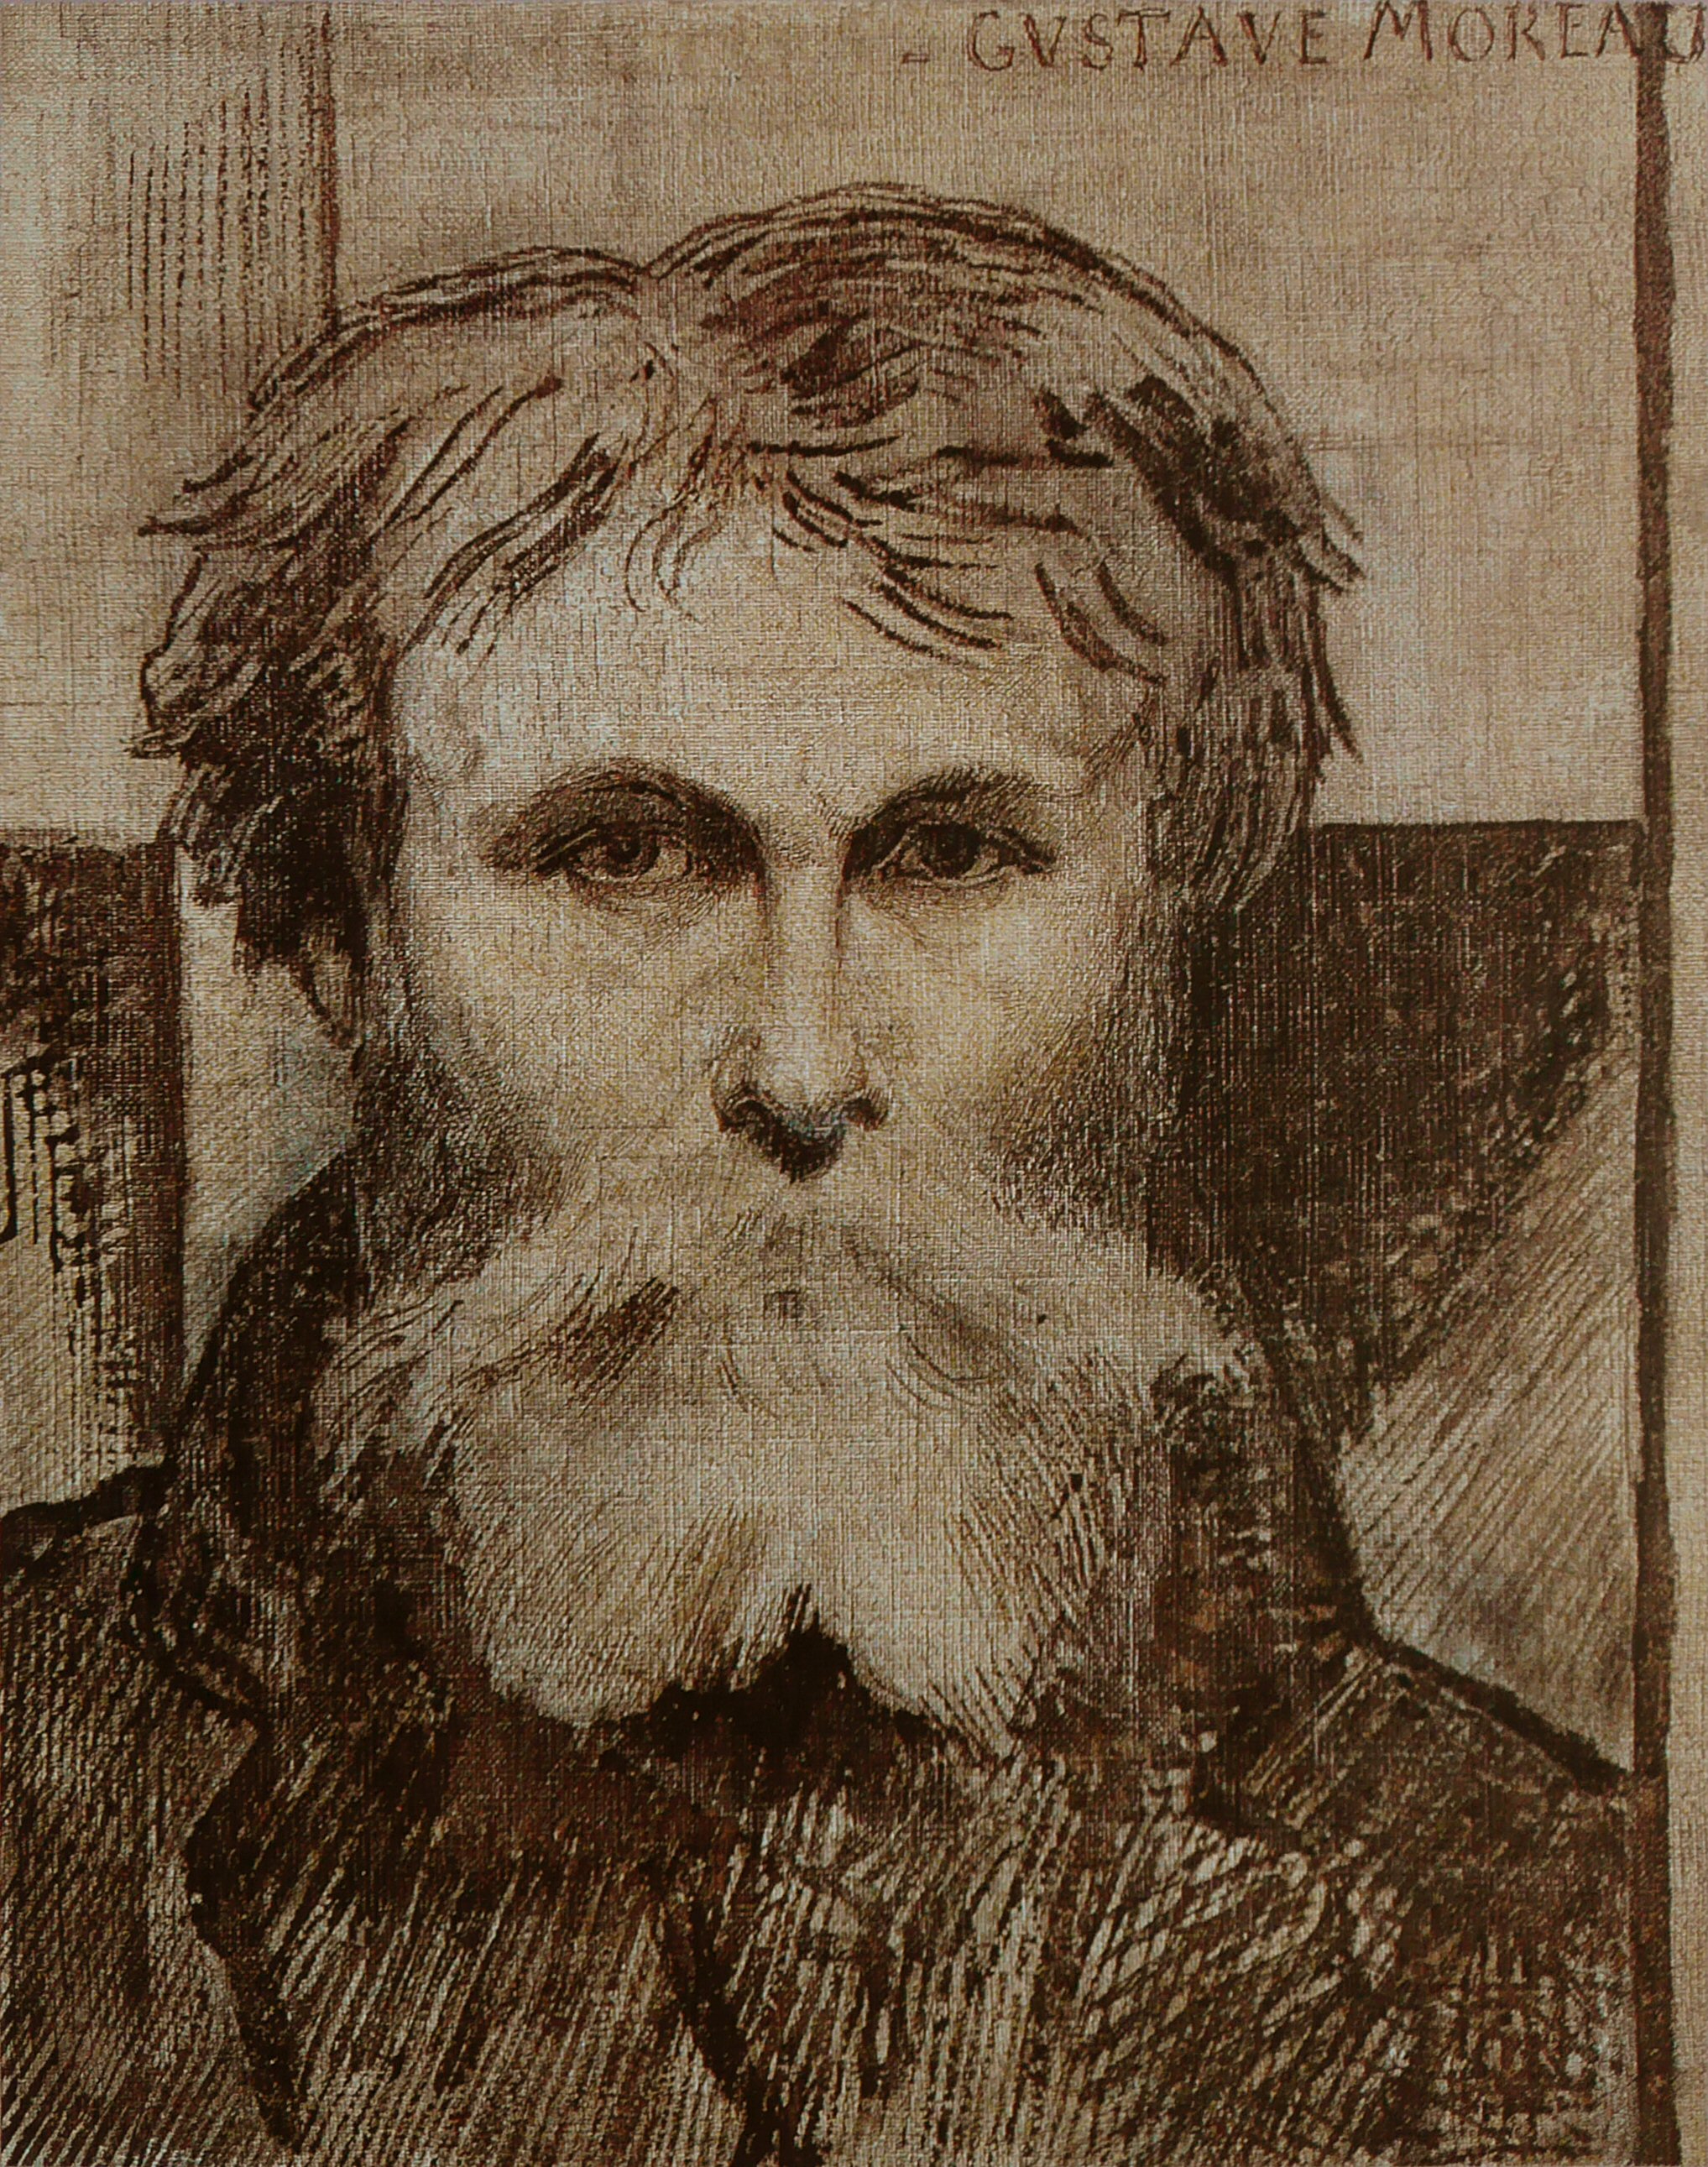 Gustave Moreau - Abril 6, 1826 - Abril 18, 1898